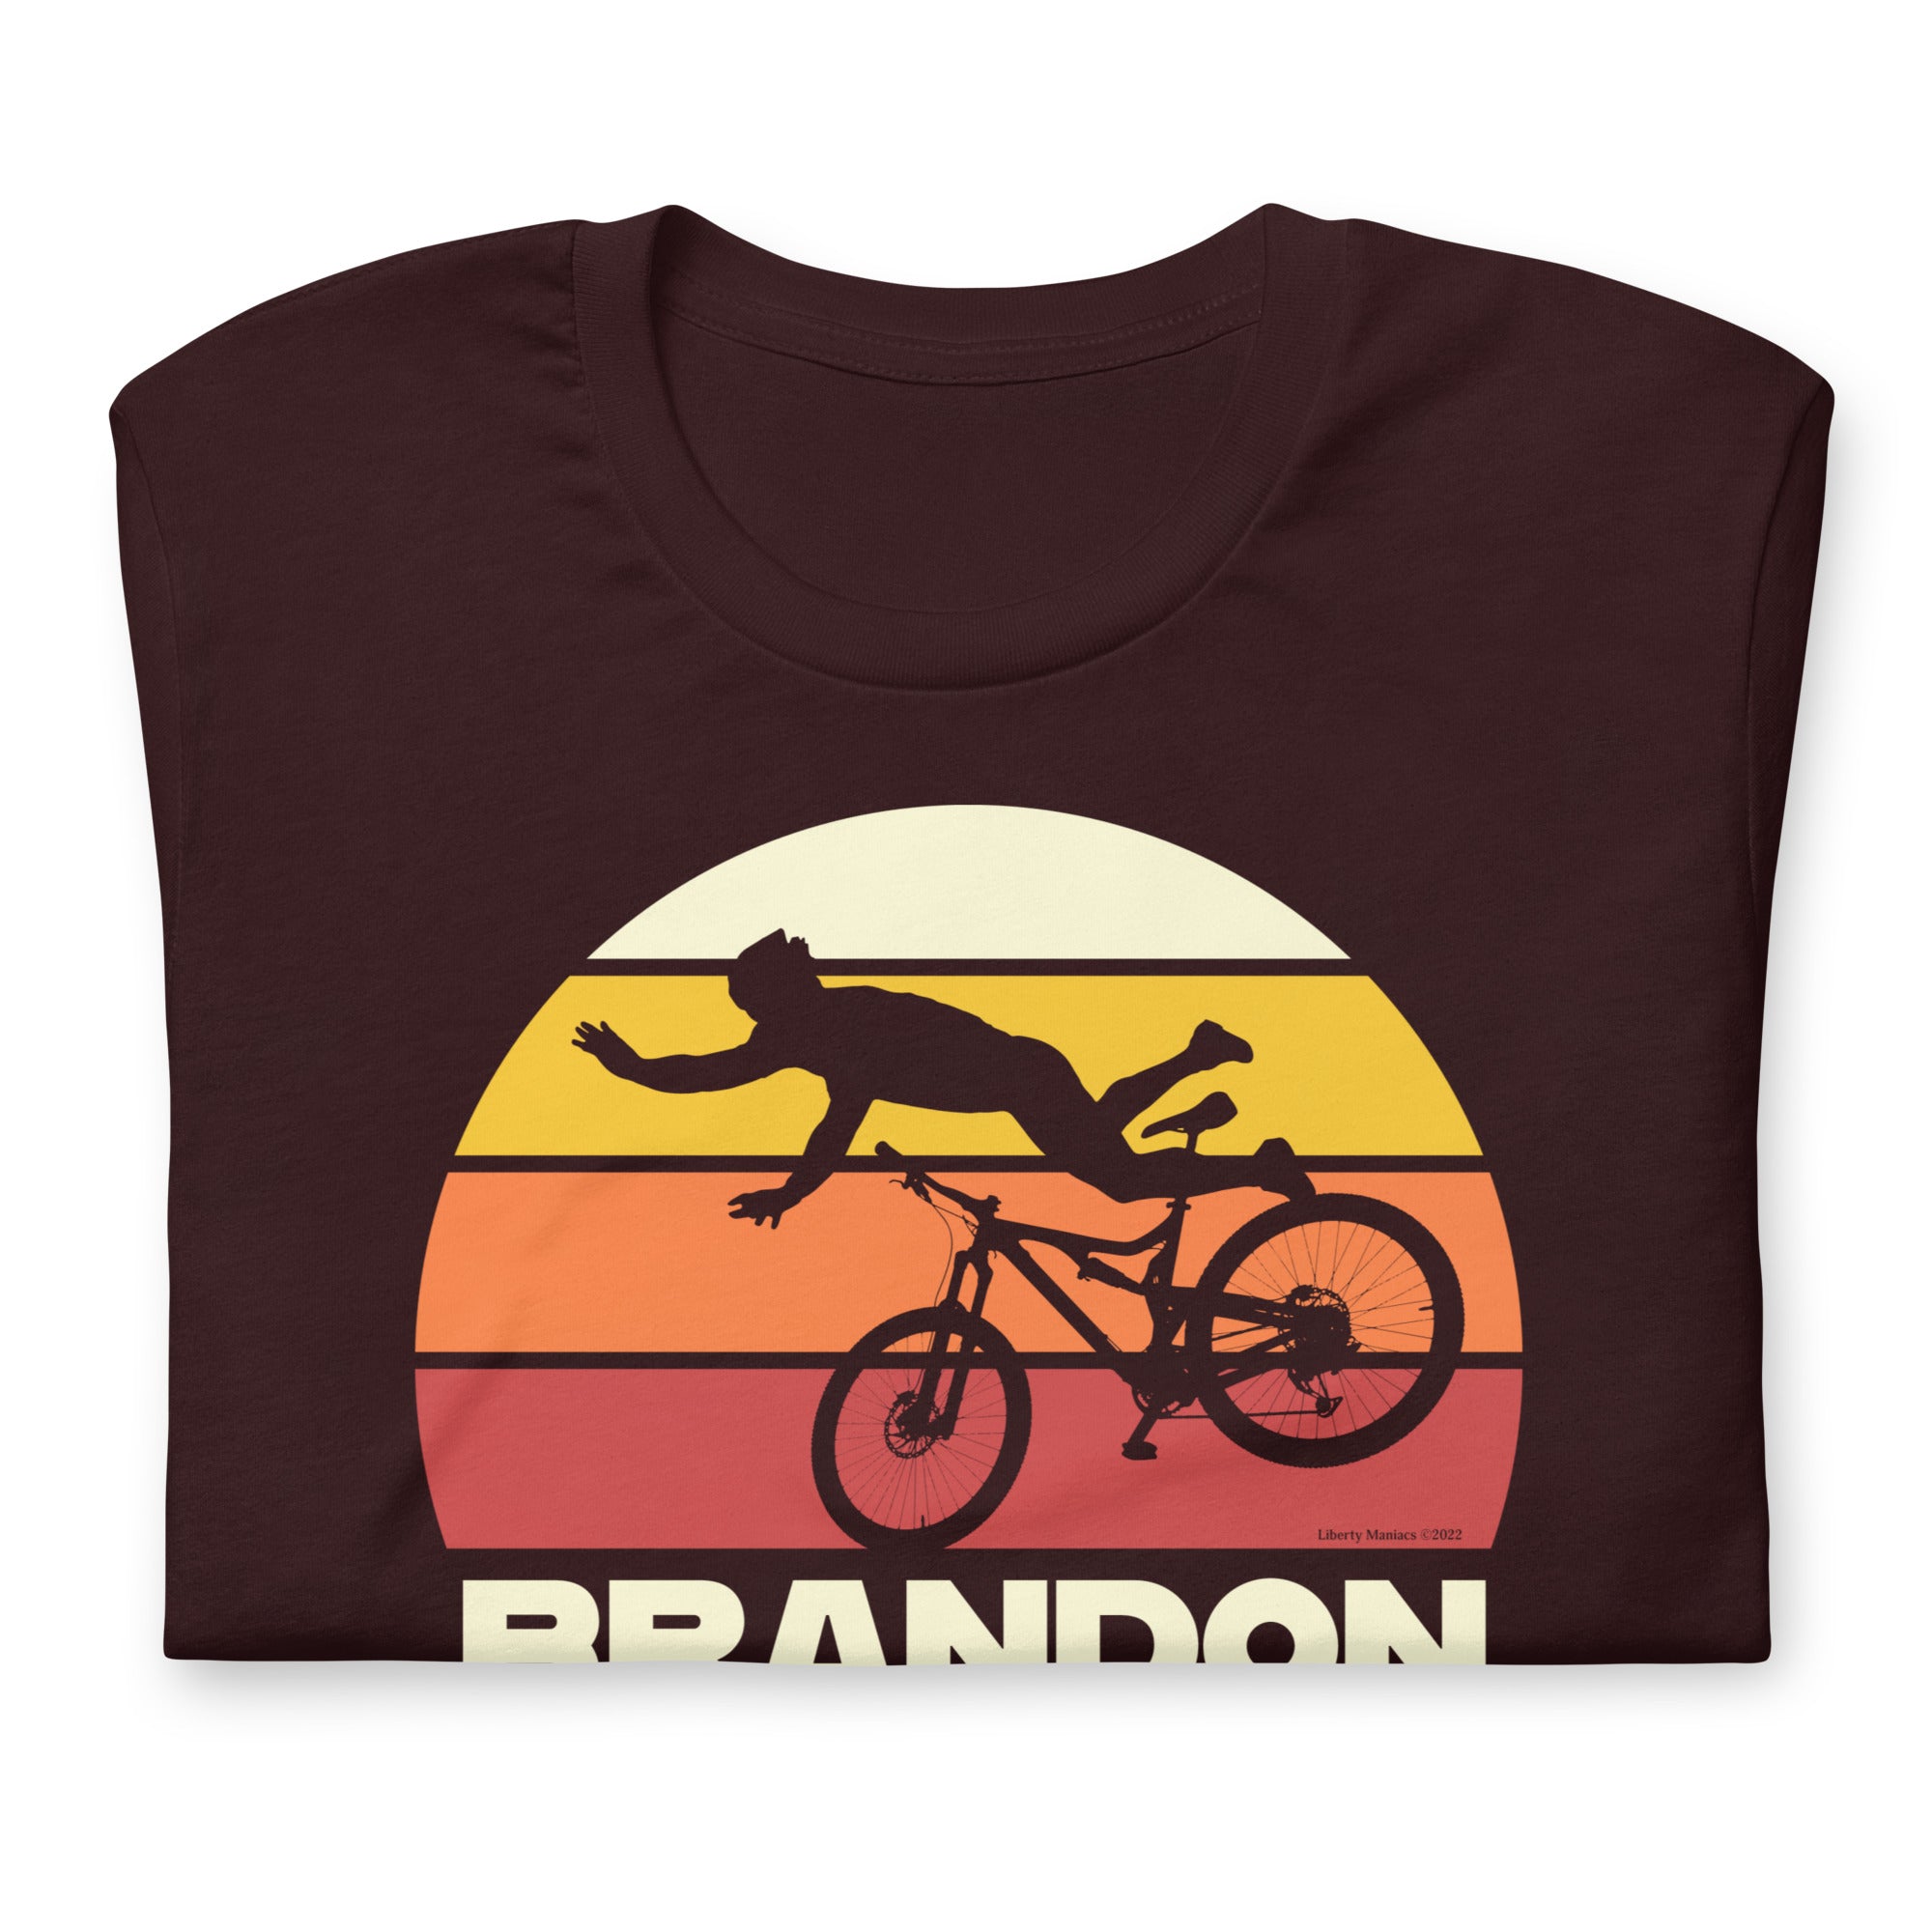 Brandon Falls T-Shirt